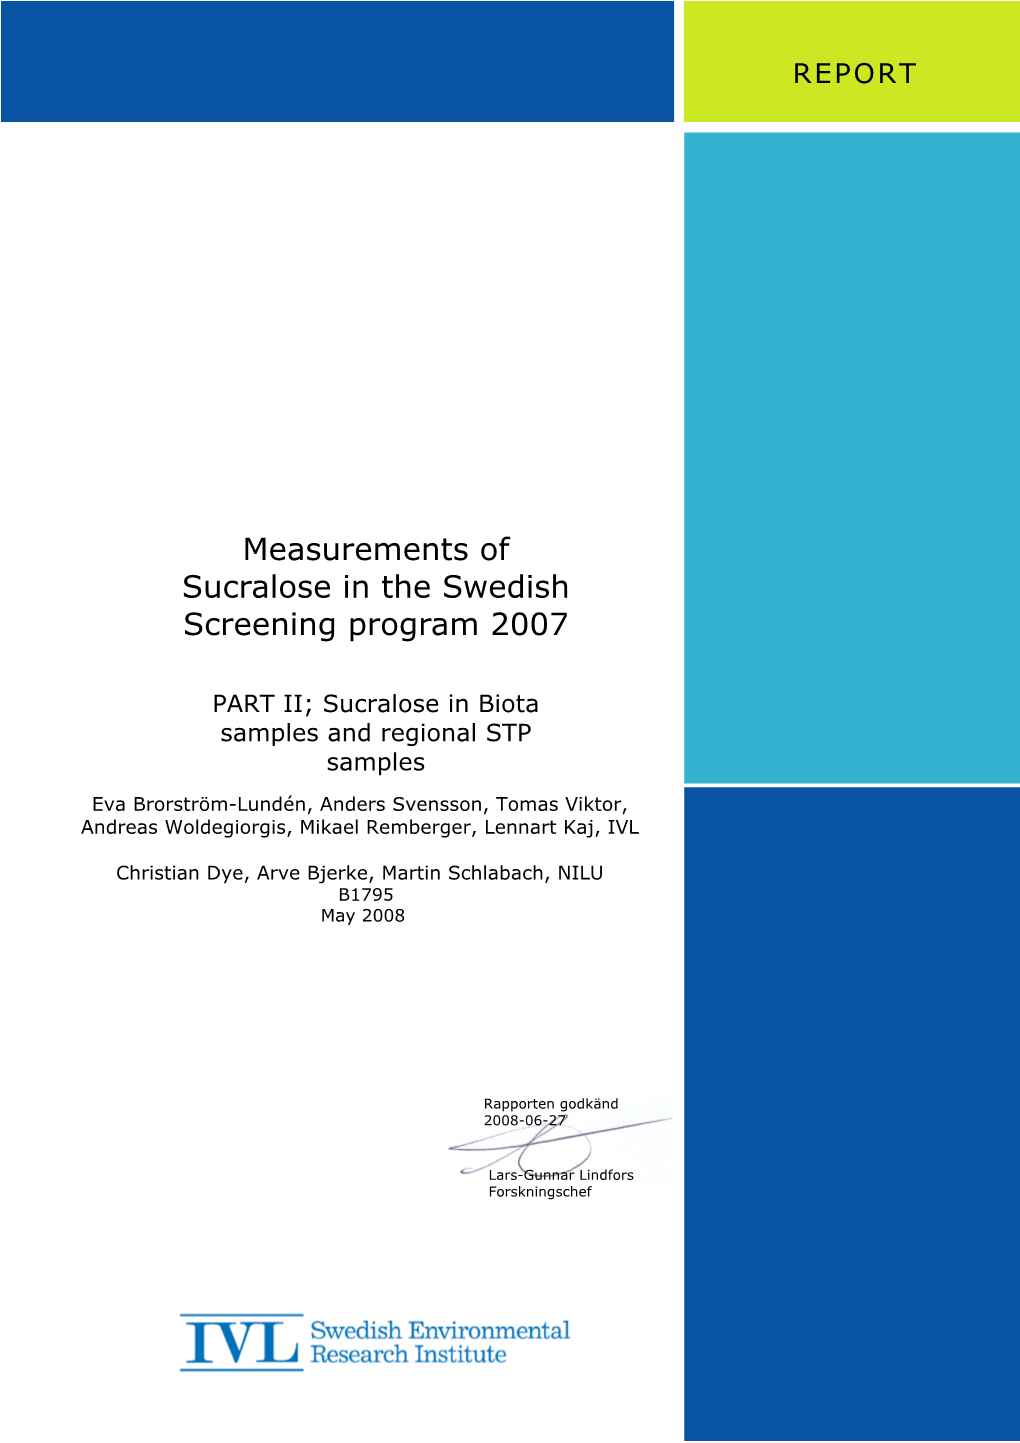 Measurements of Sucralose in the Swedish Screening Program 2007